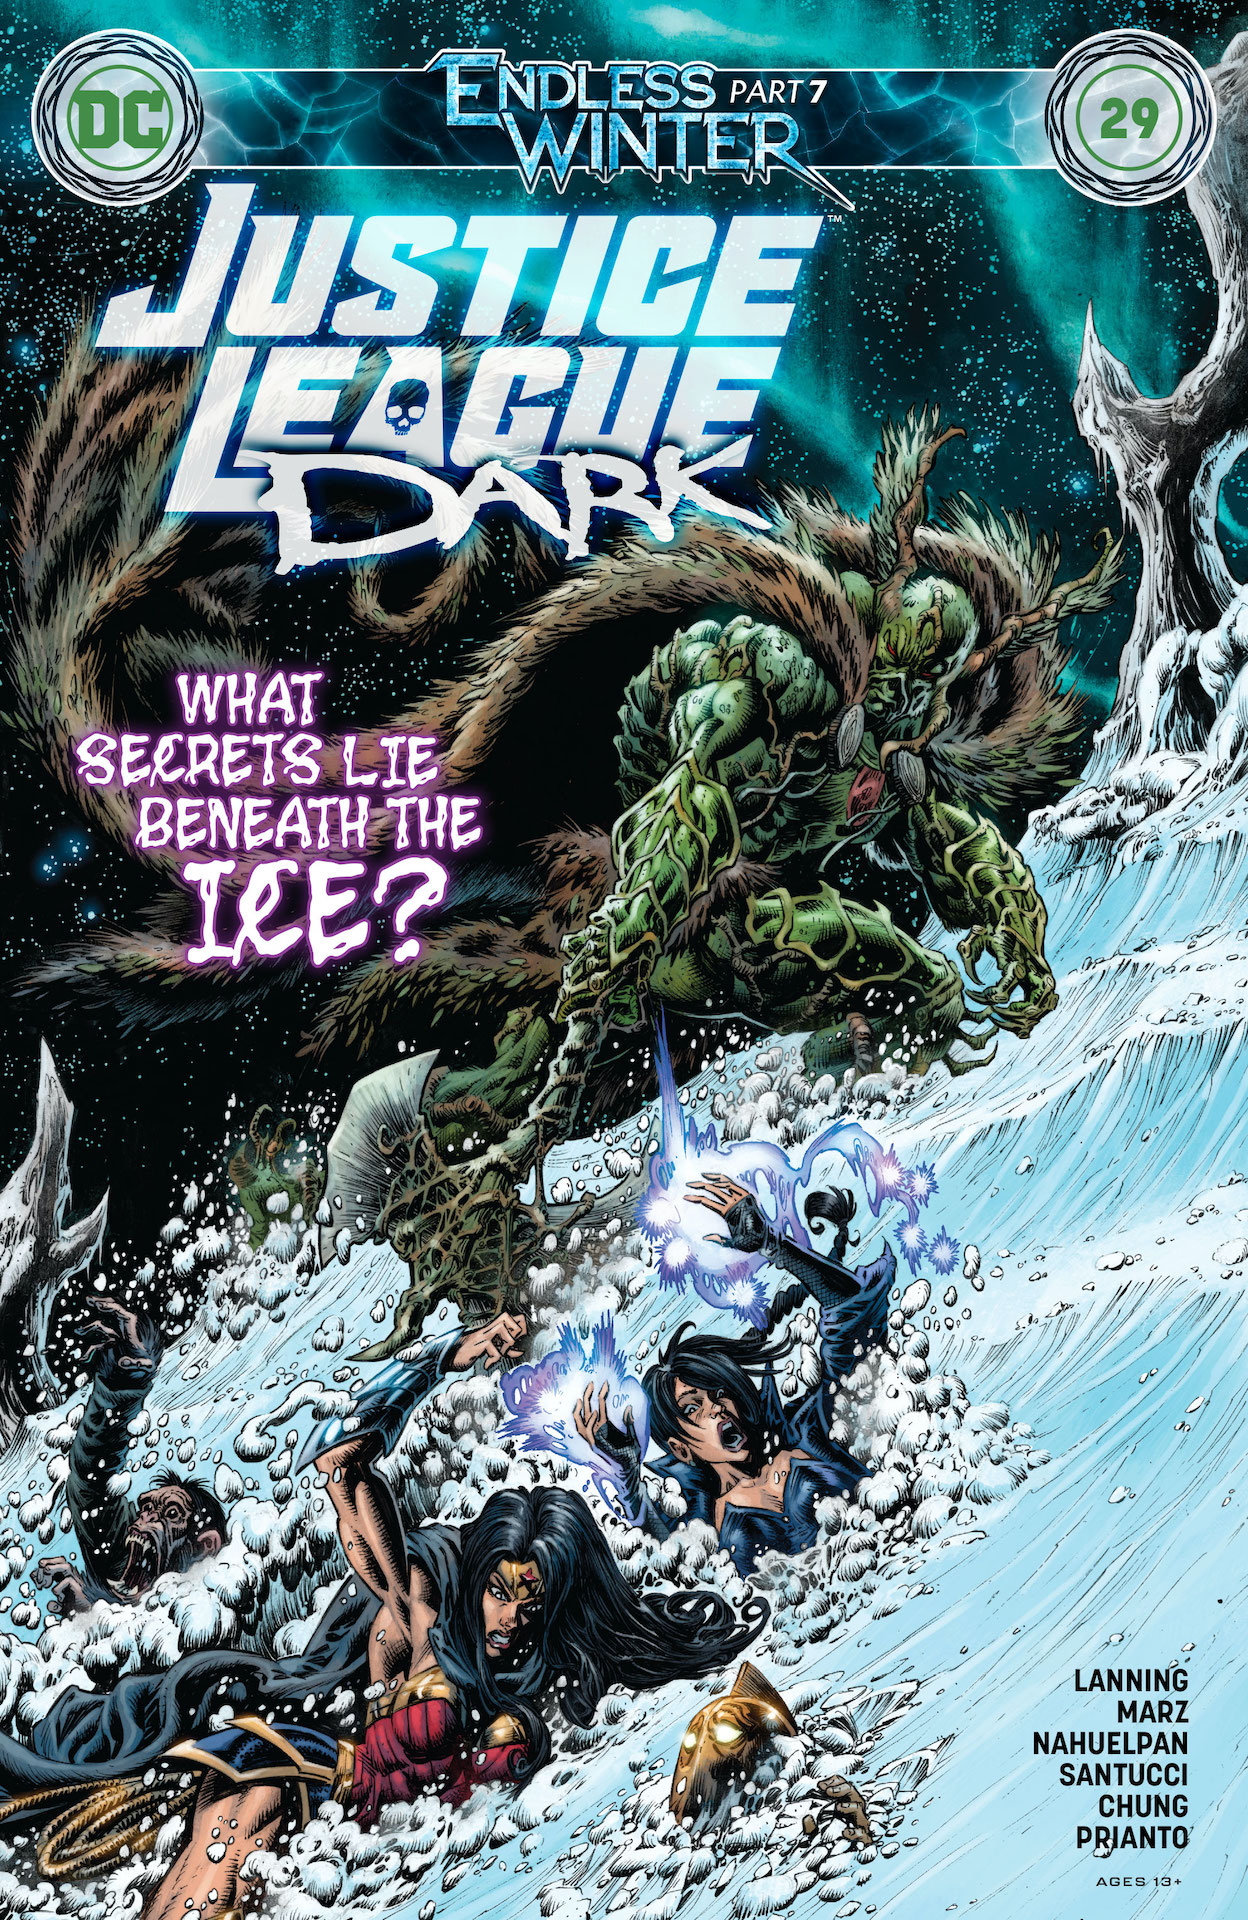 DC Preview: Justice League Dark #29